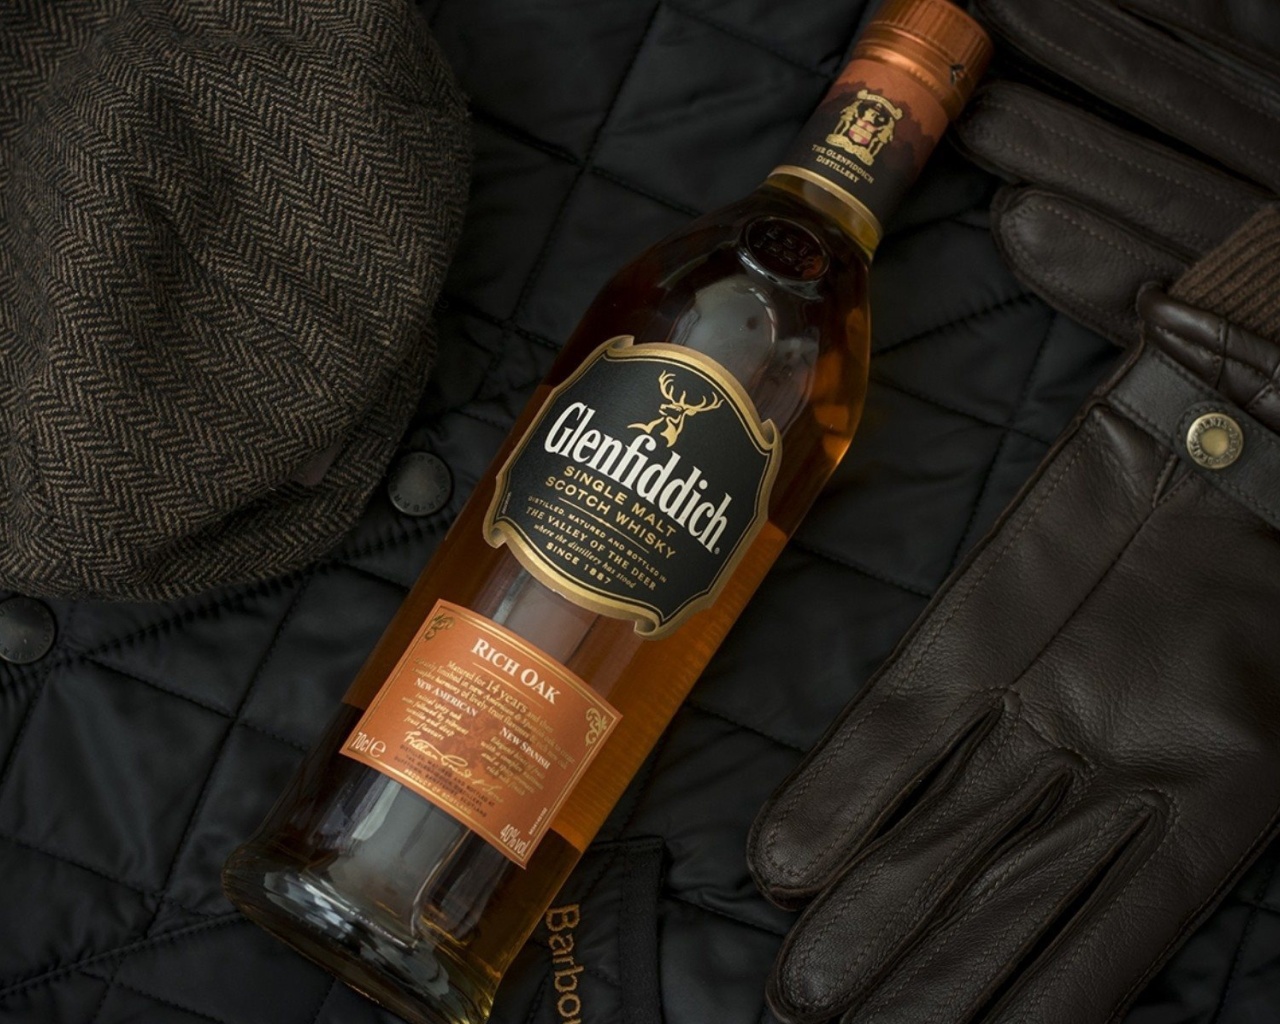 Das Glenfiddich single malt Scotch Whisky Wallpaper 1280x1024